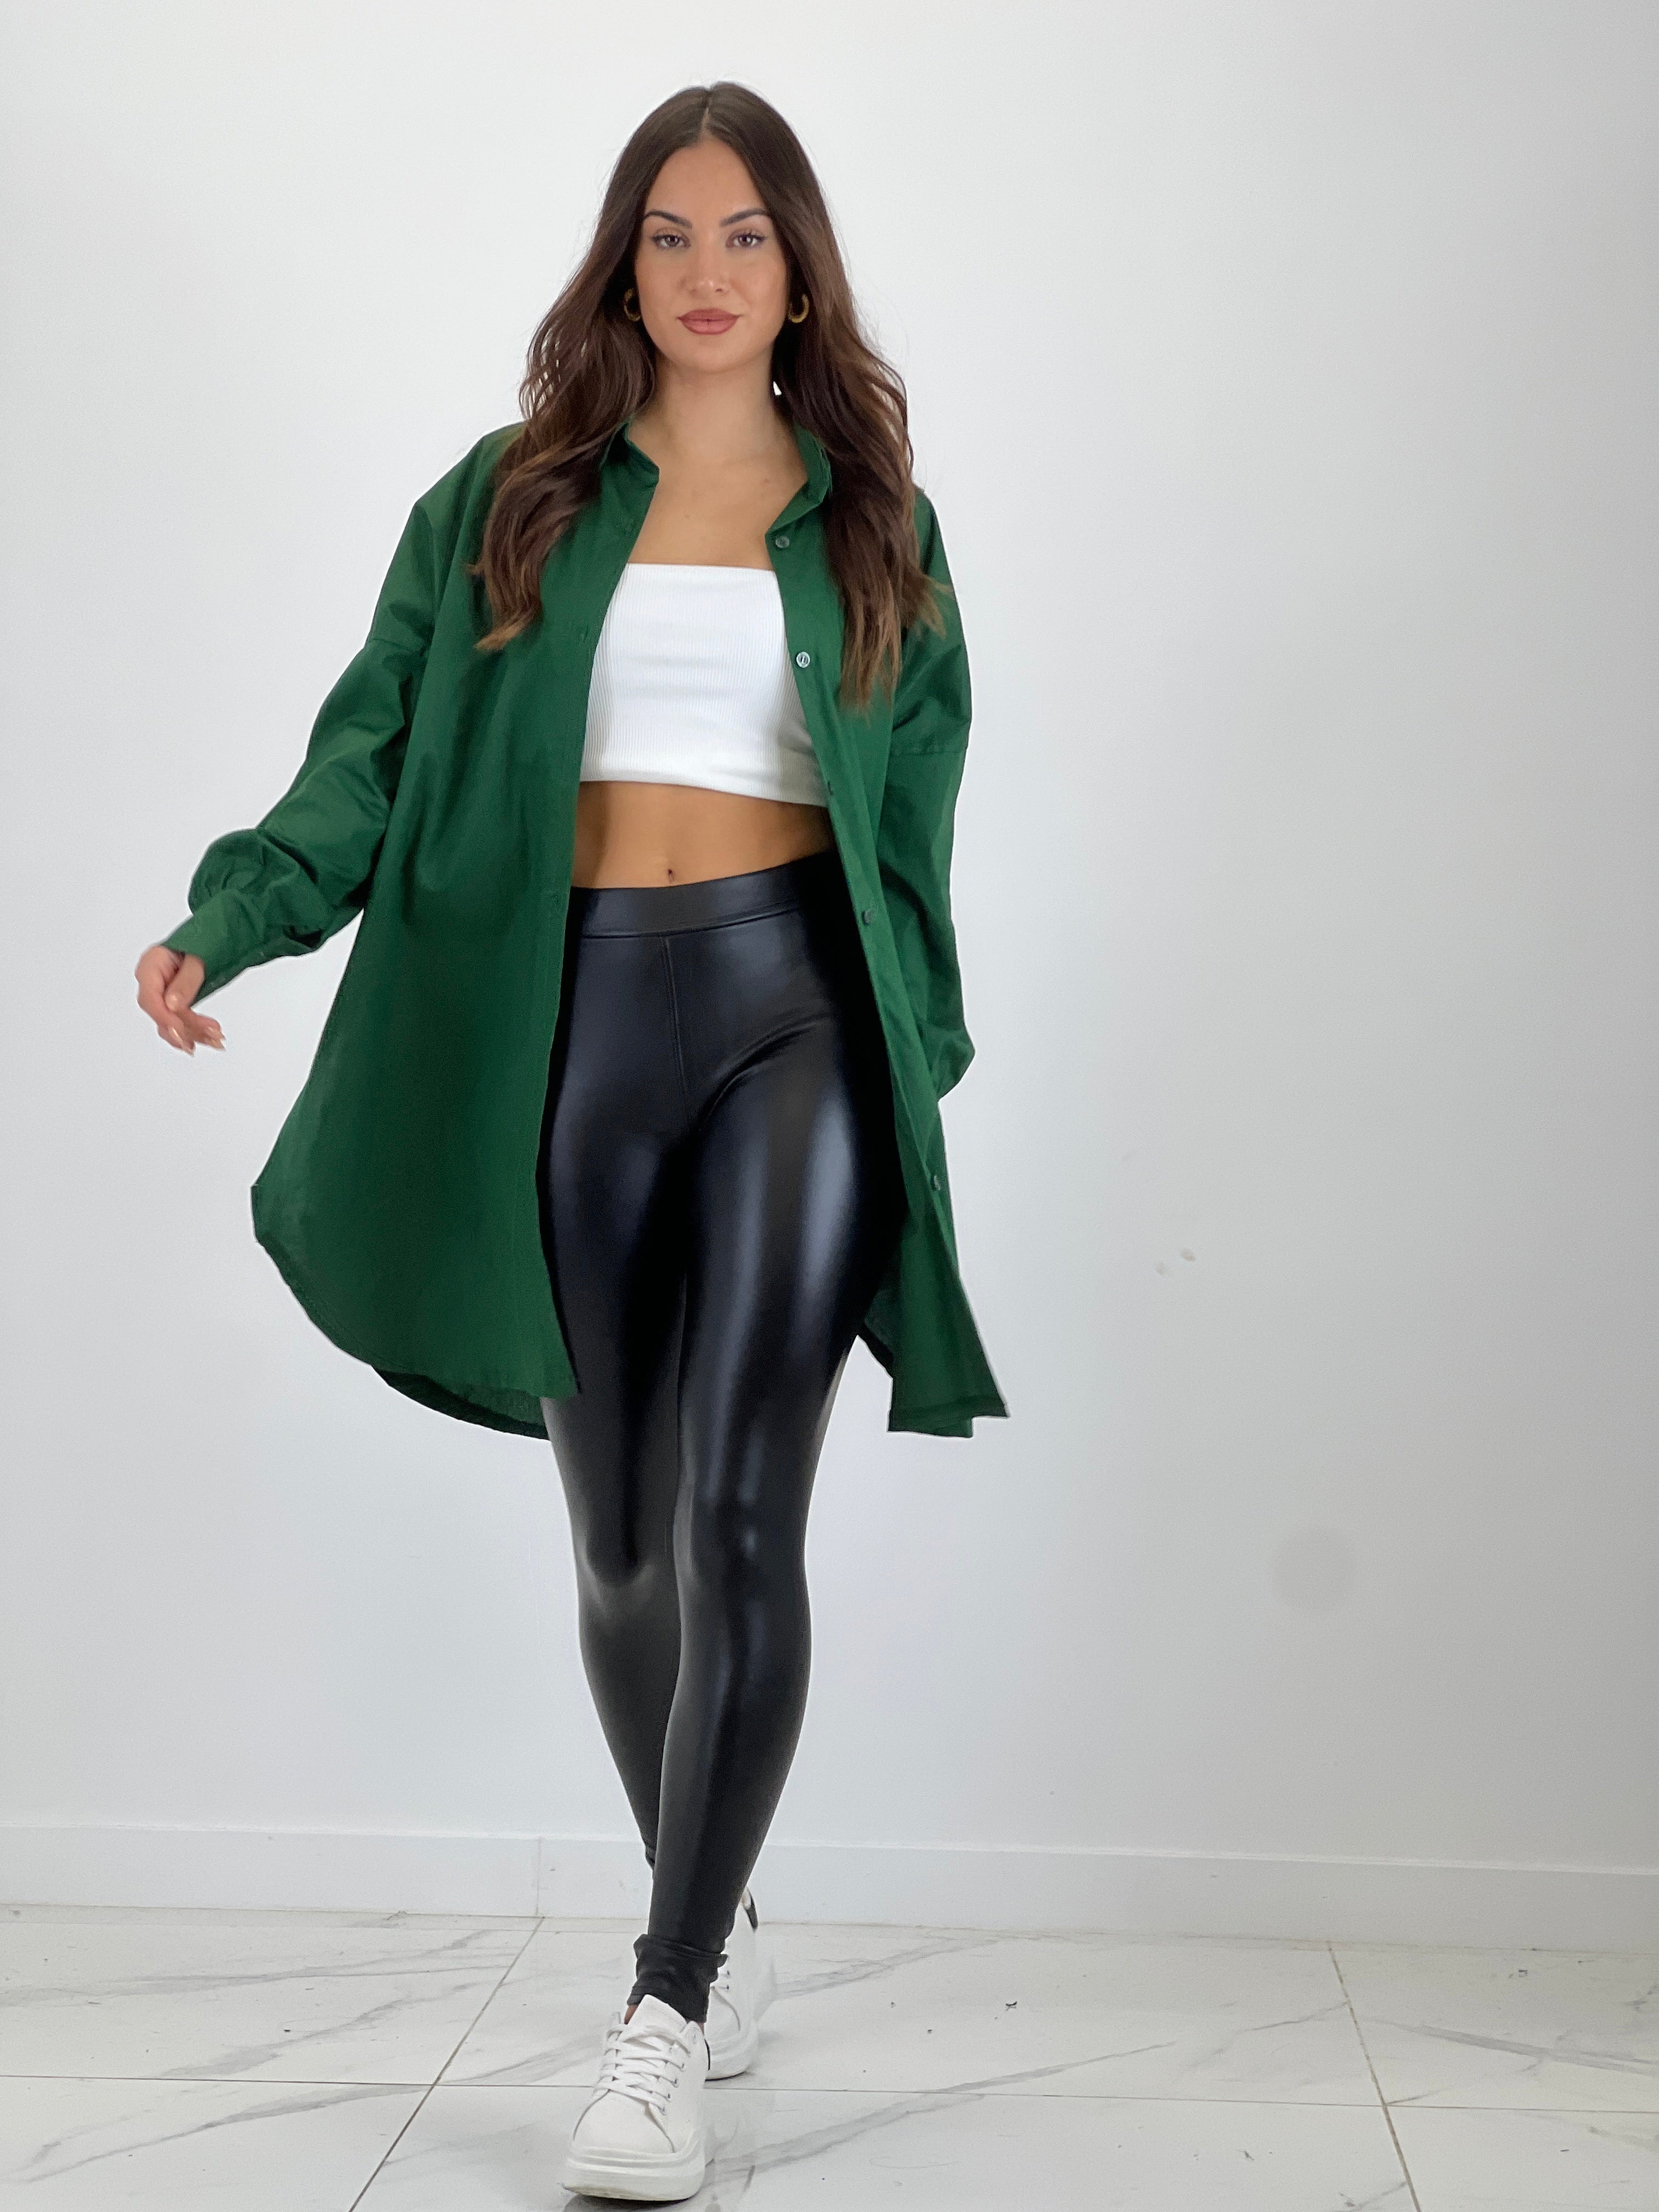 Leather effect leggings  Zebra&Maduixa – Zebra&Maduixa®